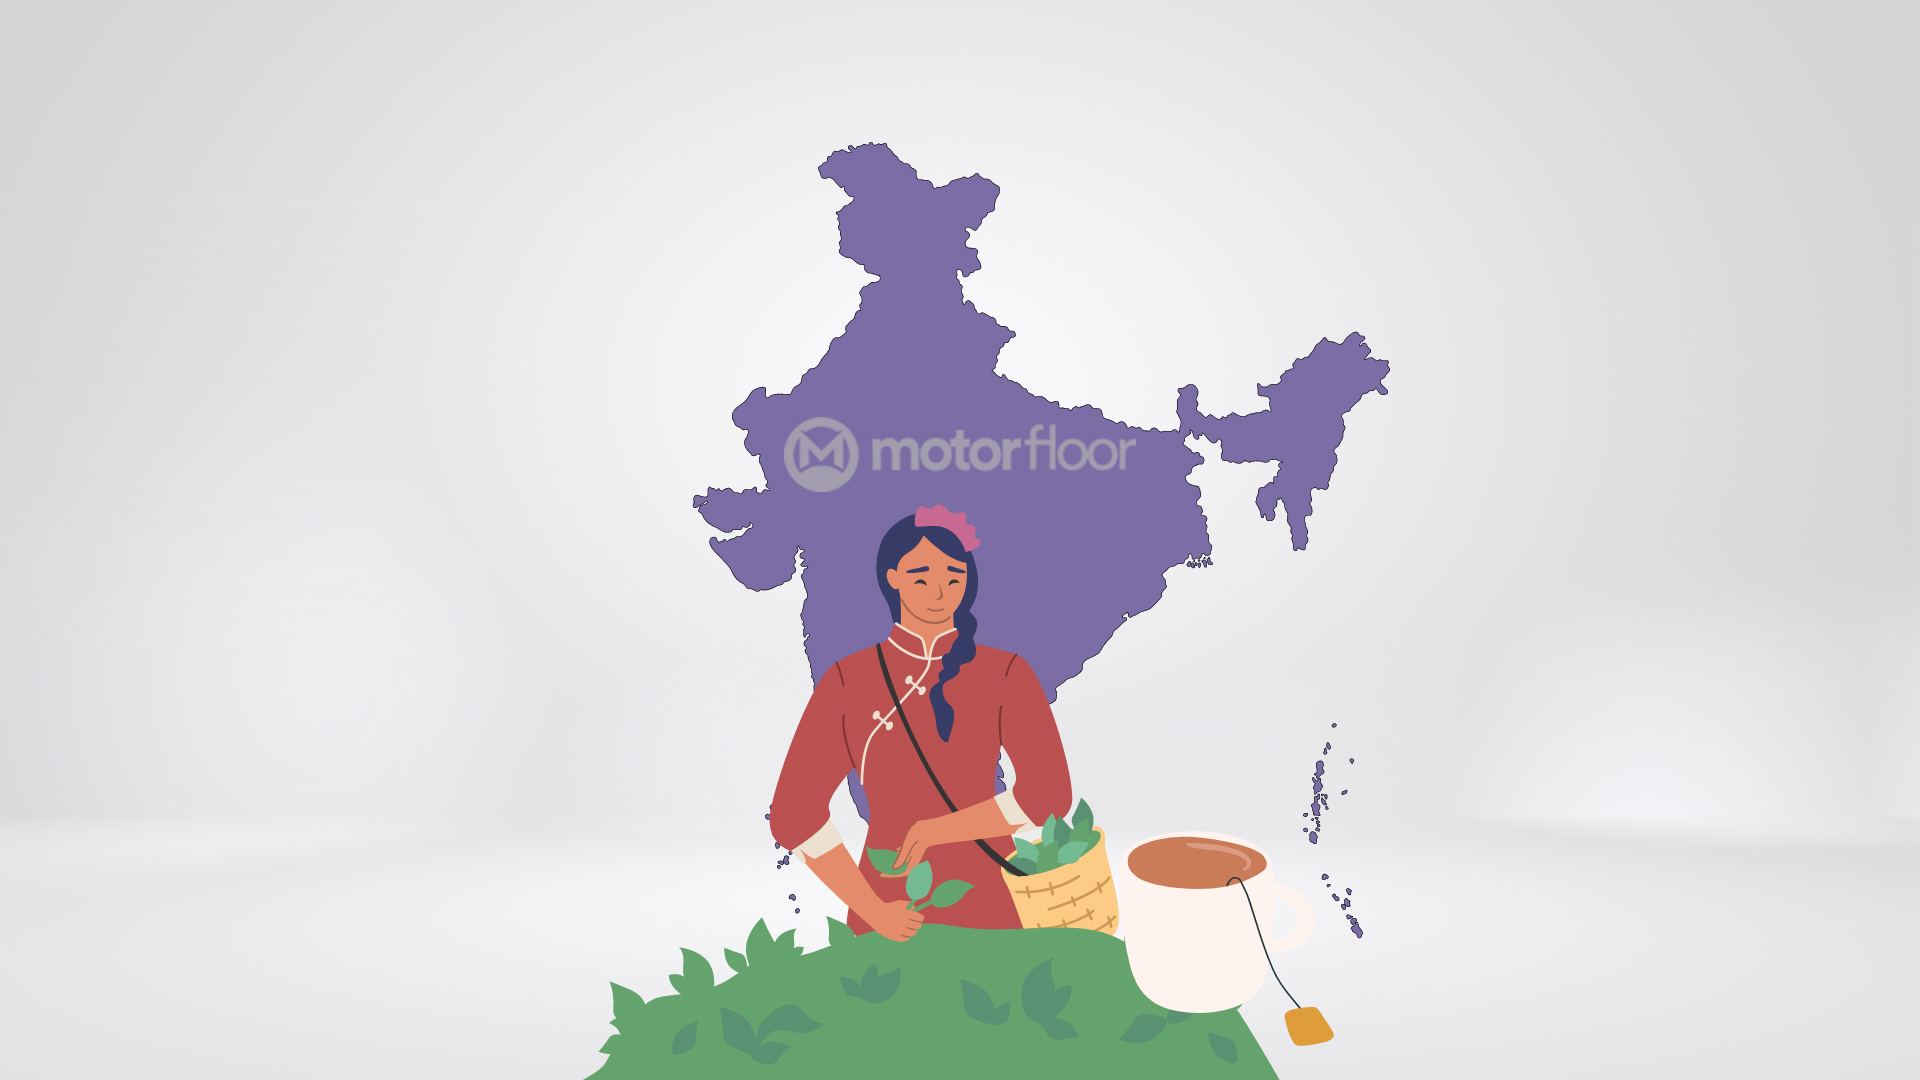 Tea Producing States in India